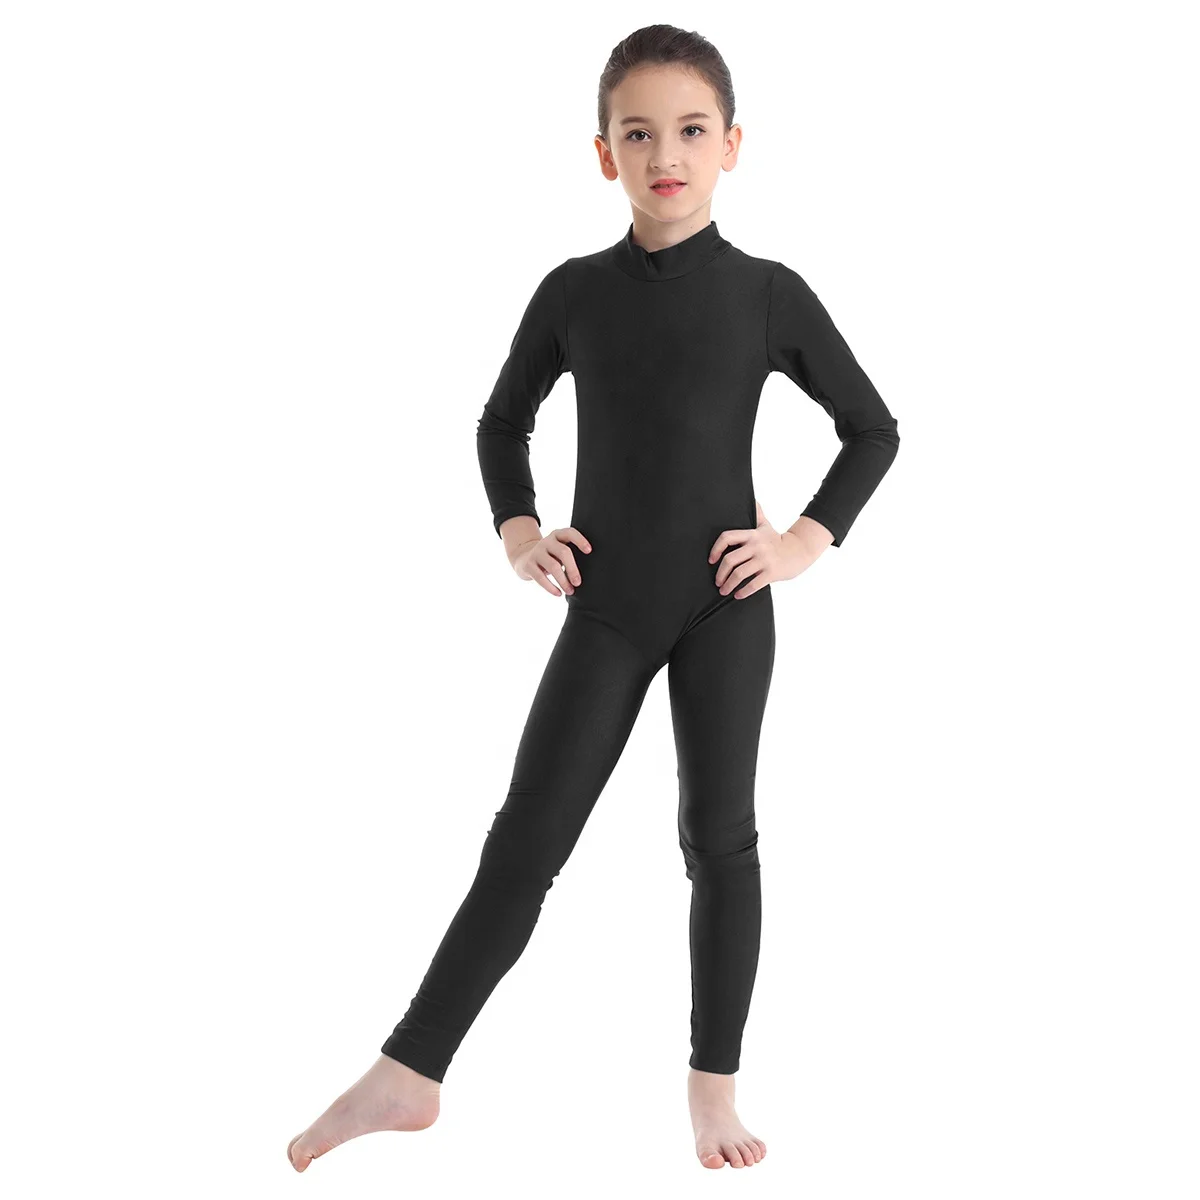 

Kids Girls Soft Dance Leotards Breathable Long Sleeves Zippered Ballet Dance Gymnastics Jumpsuit Unitard Dancewear